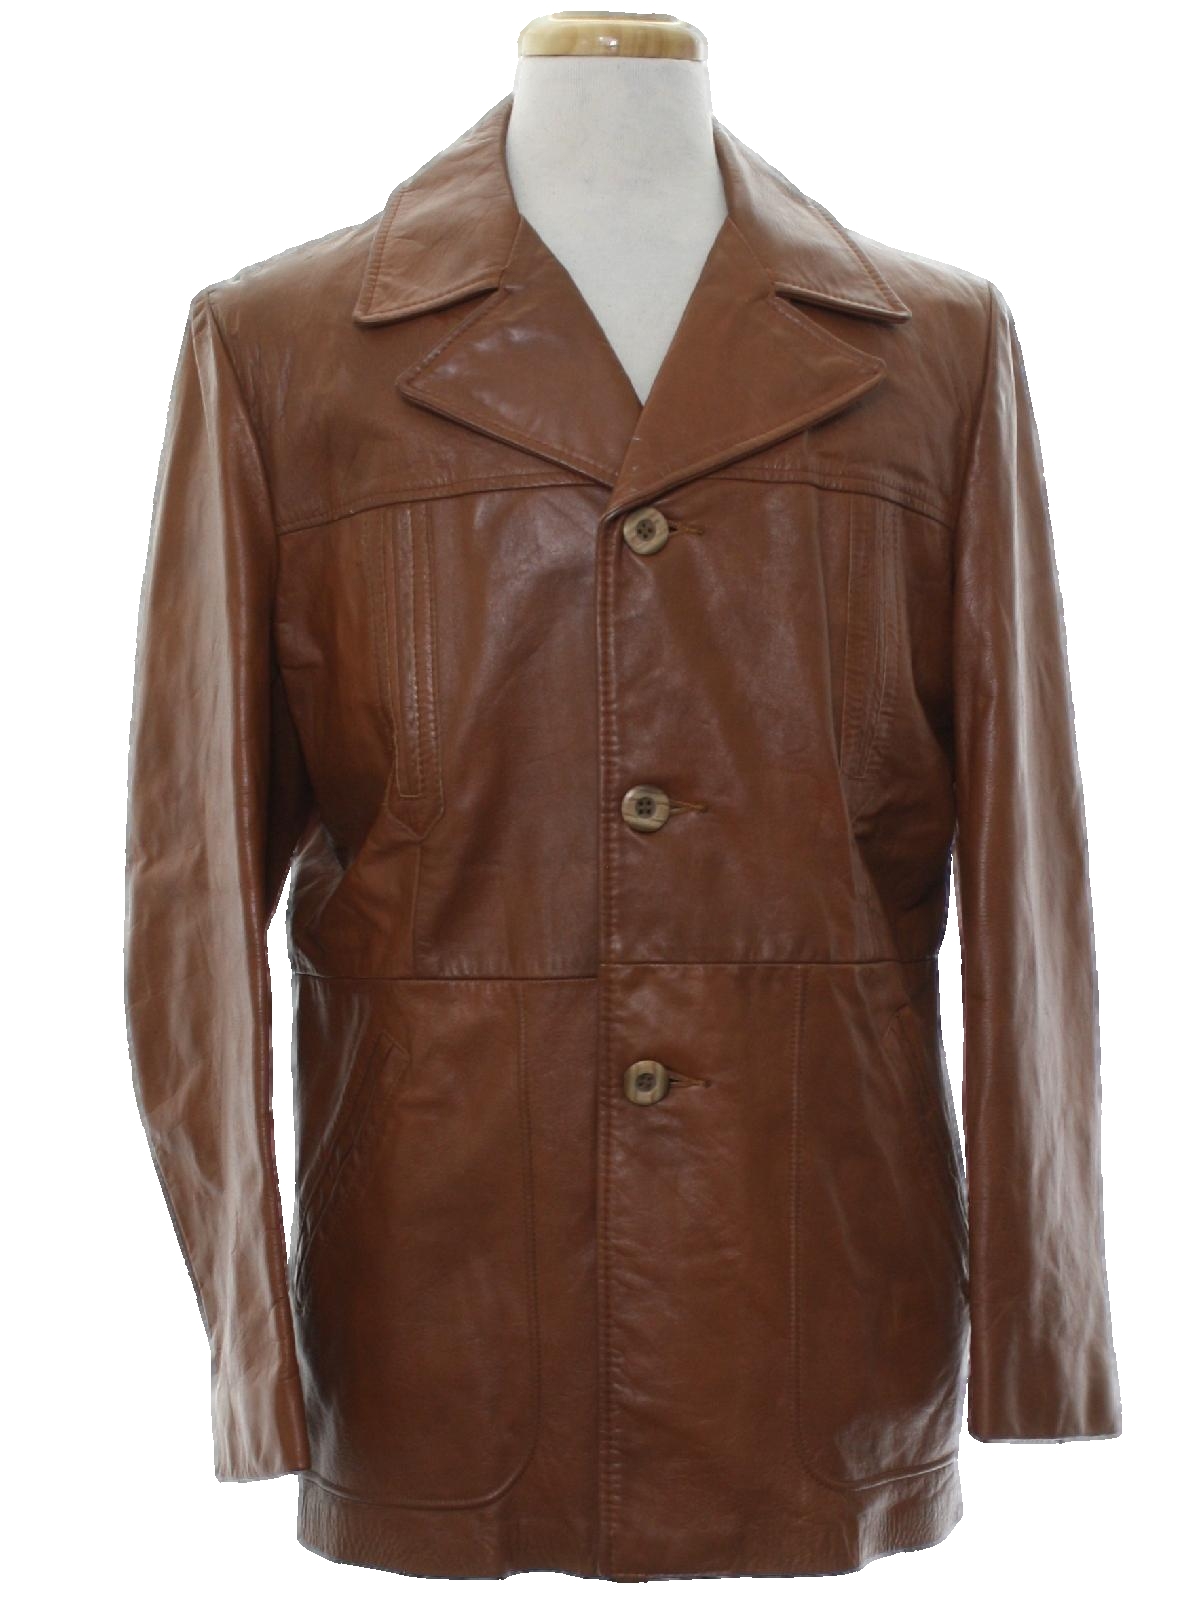 Retro 1970's Leather Jacket (Cresco) : 70s -Cresco- Mens warm brown ...